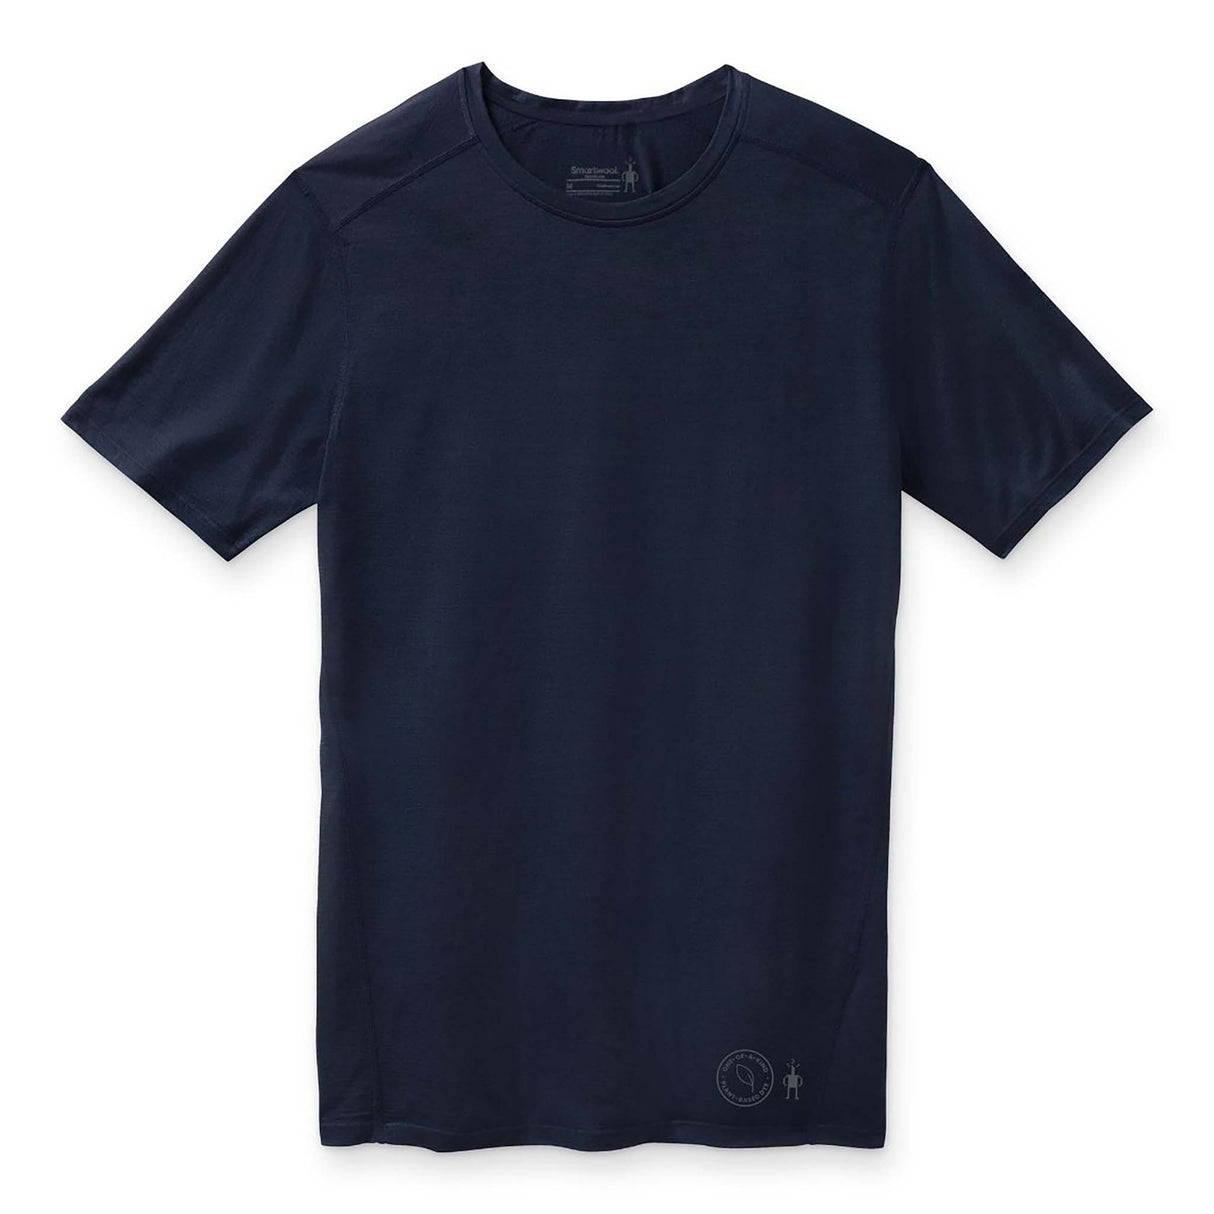 Smartwool Merino 150 Plant-Based Dye t-shirt à manches courtes homme indigo blue